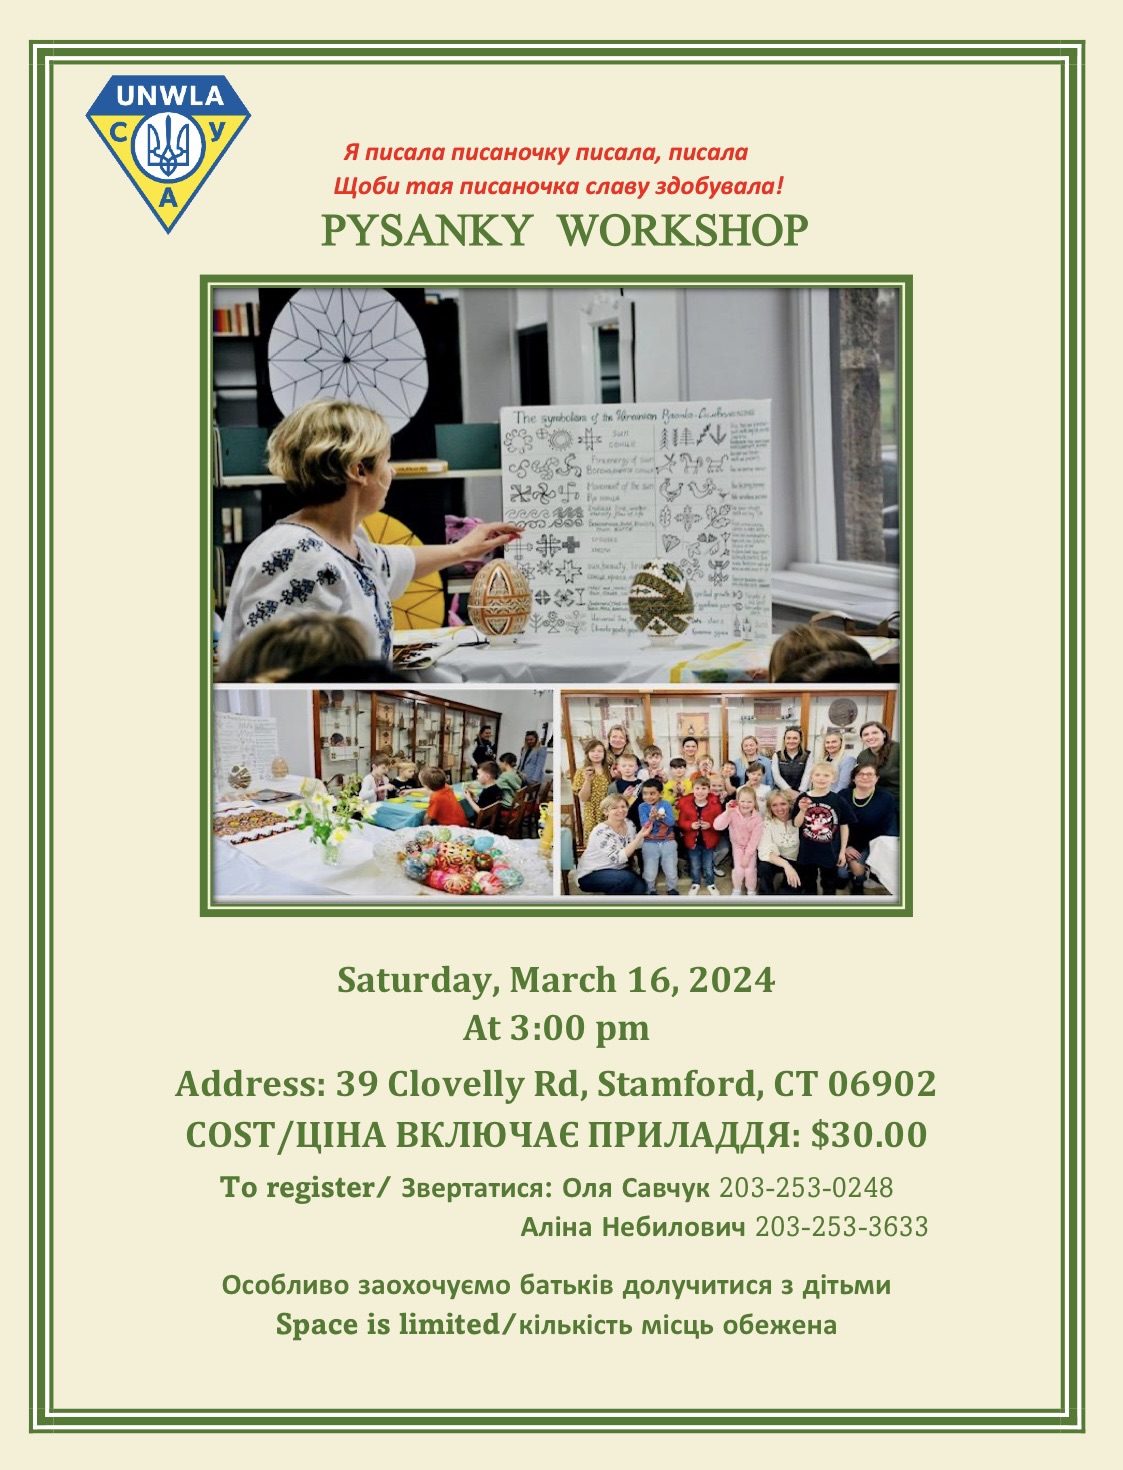 Pysanky Workshop - March 16 - CT